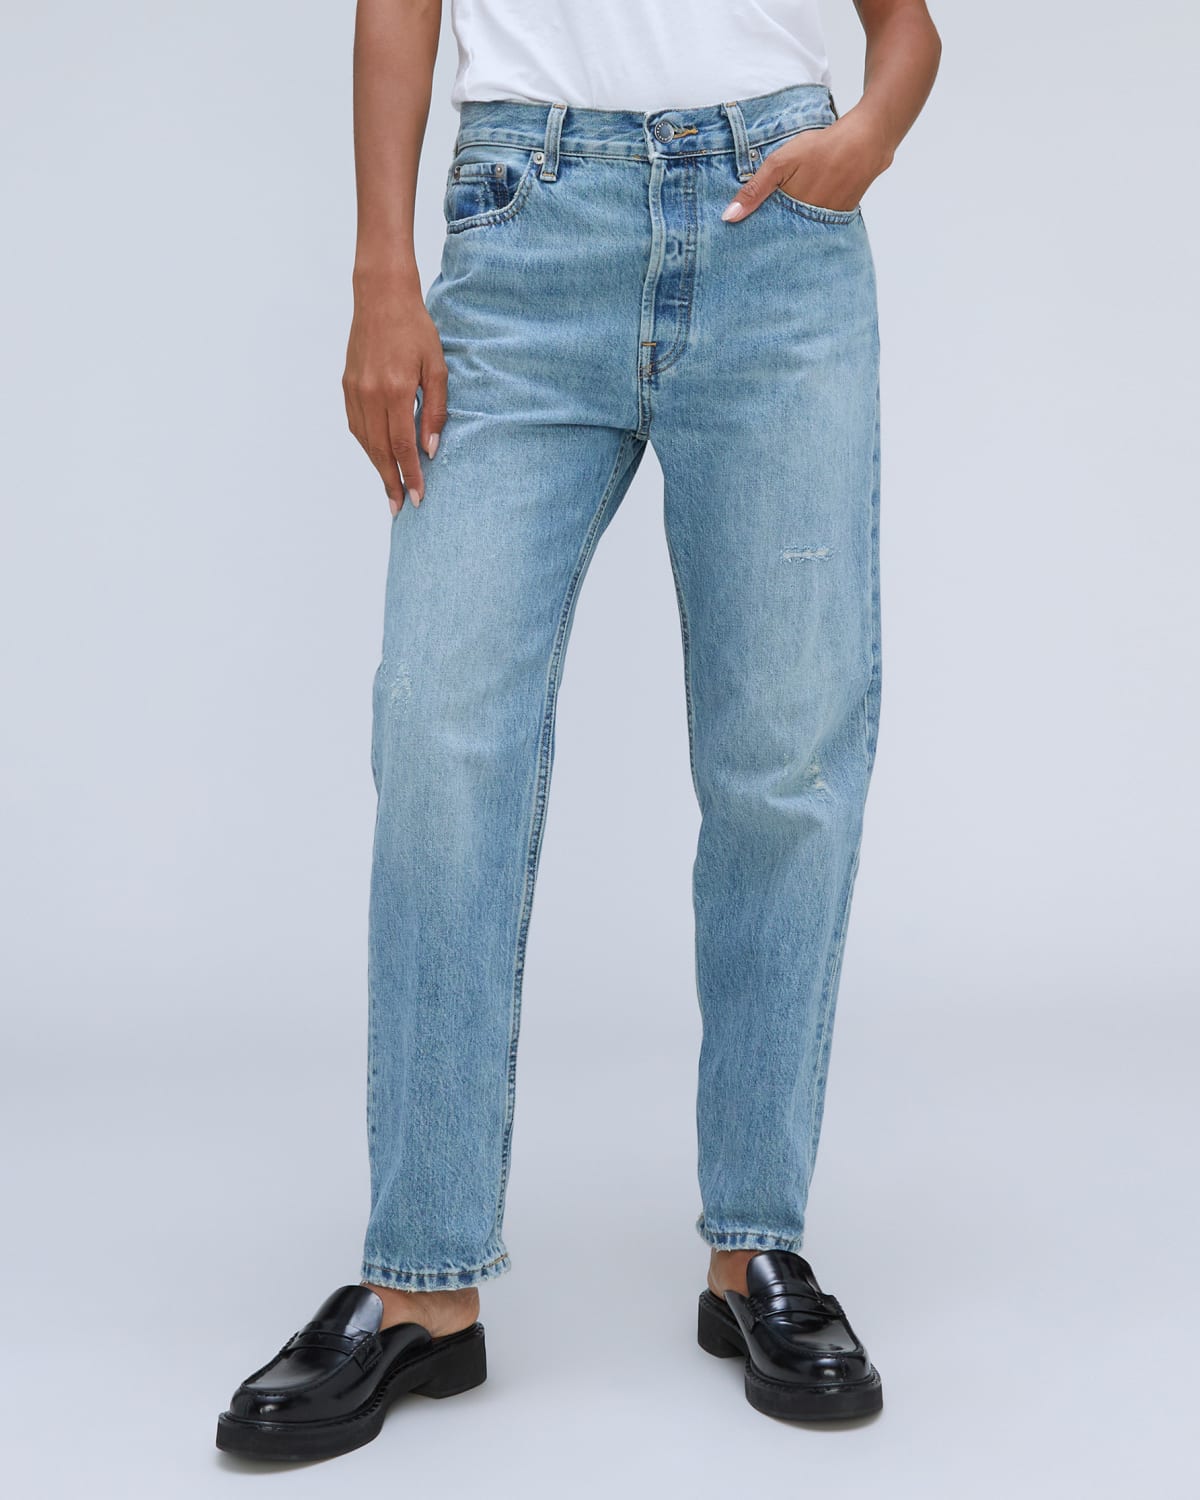 Women's Jeans – Everlane